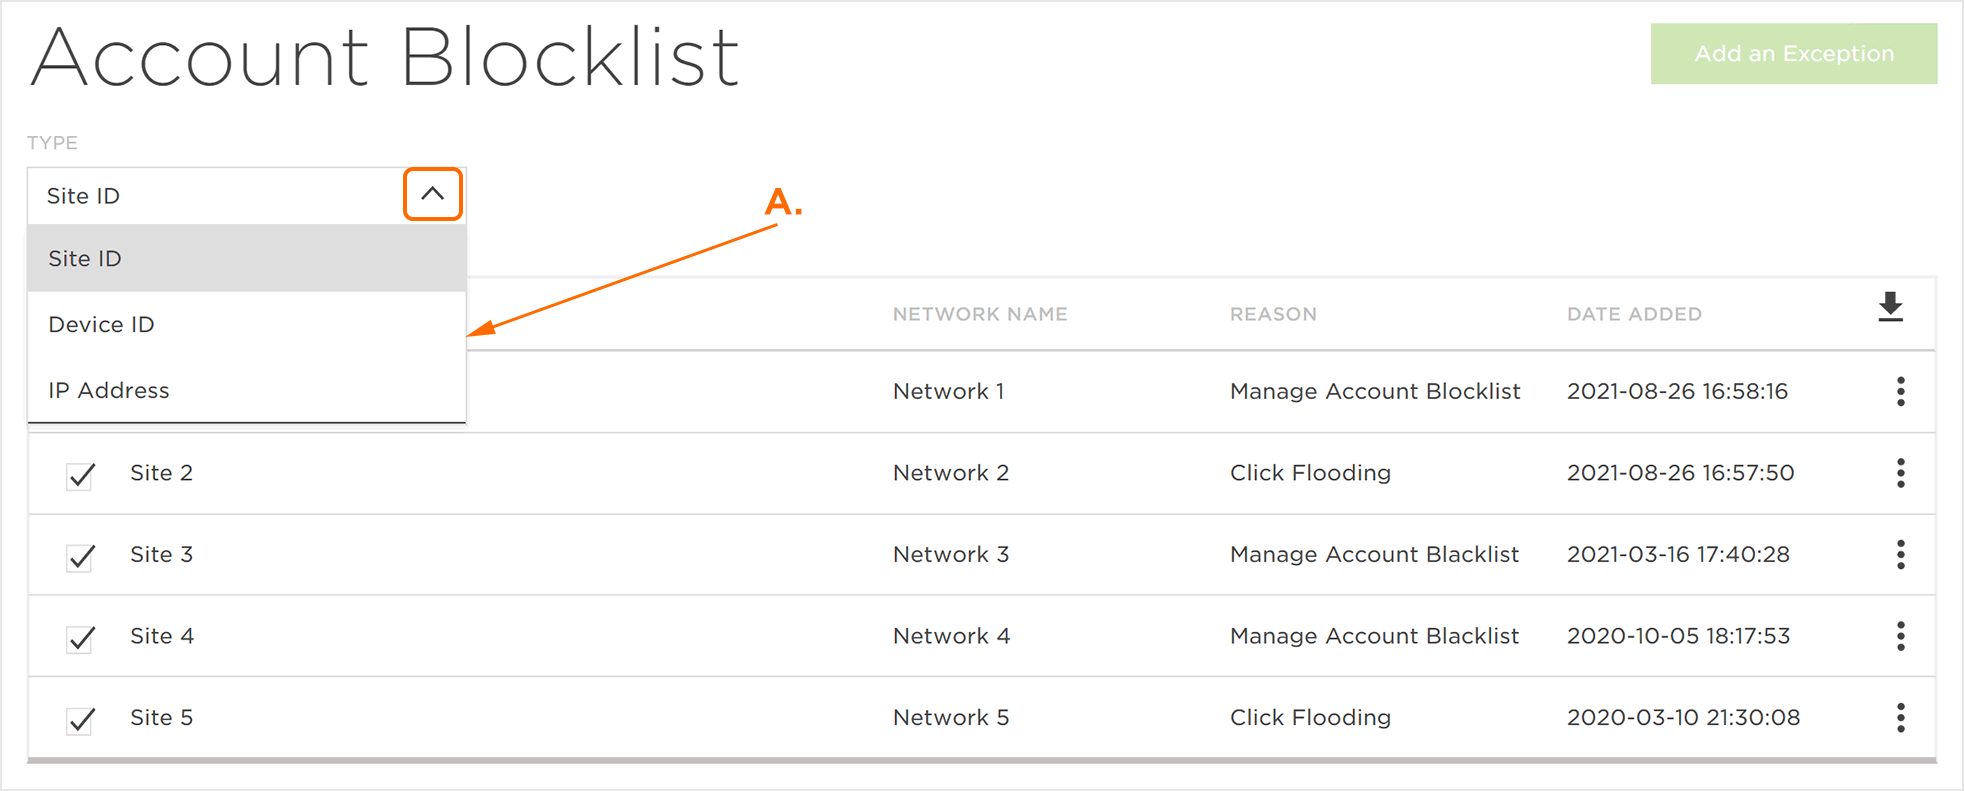 Blocklist Categories